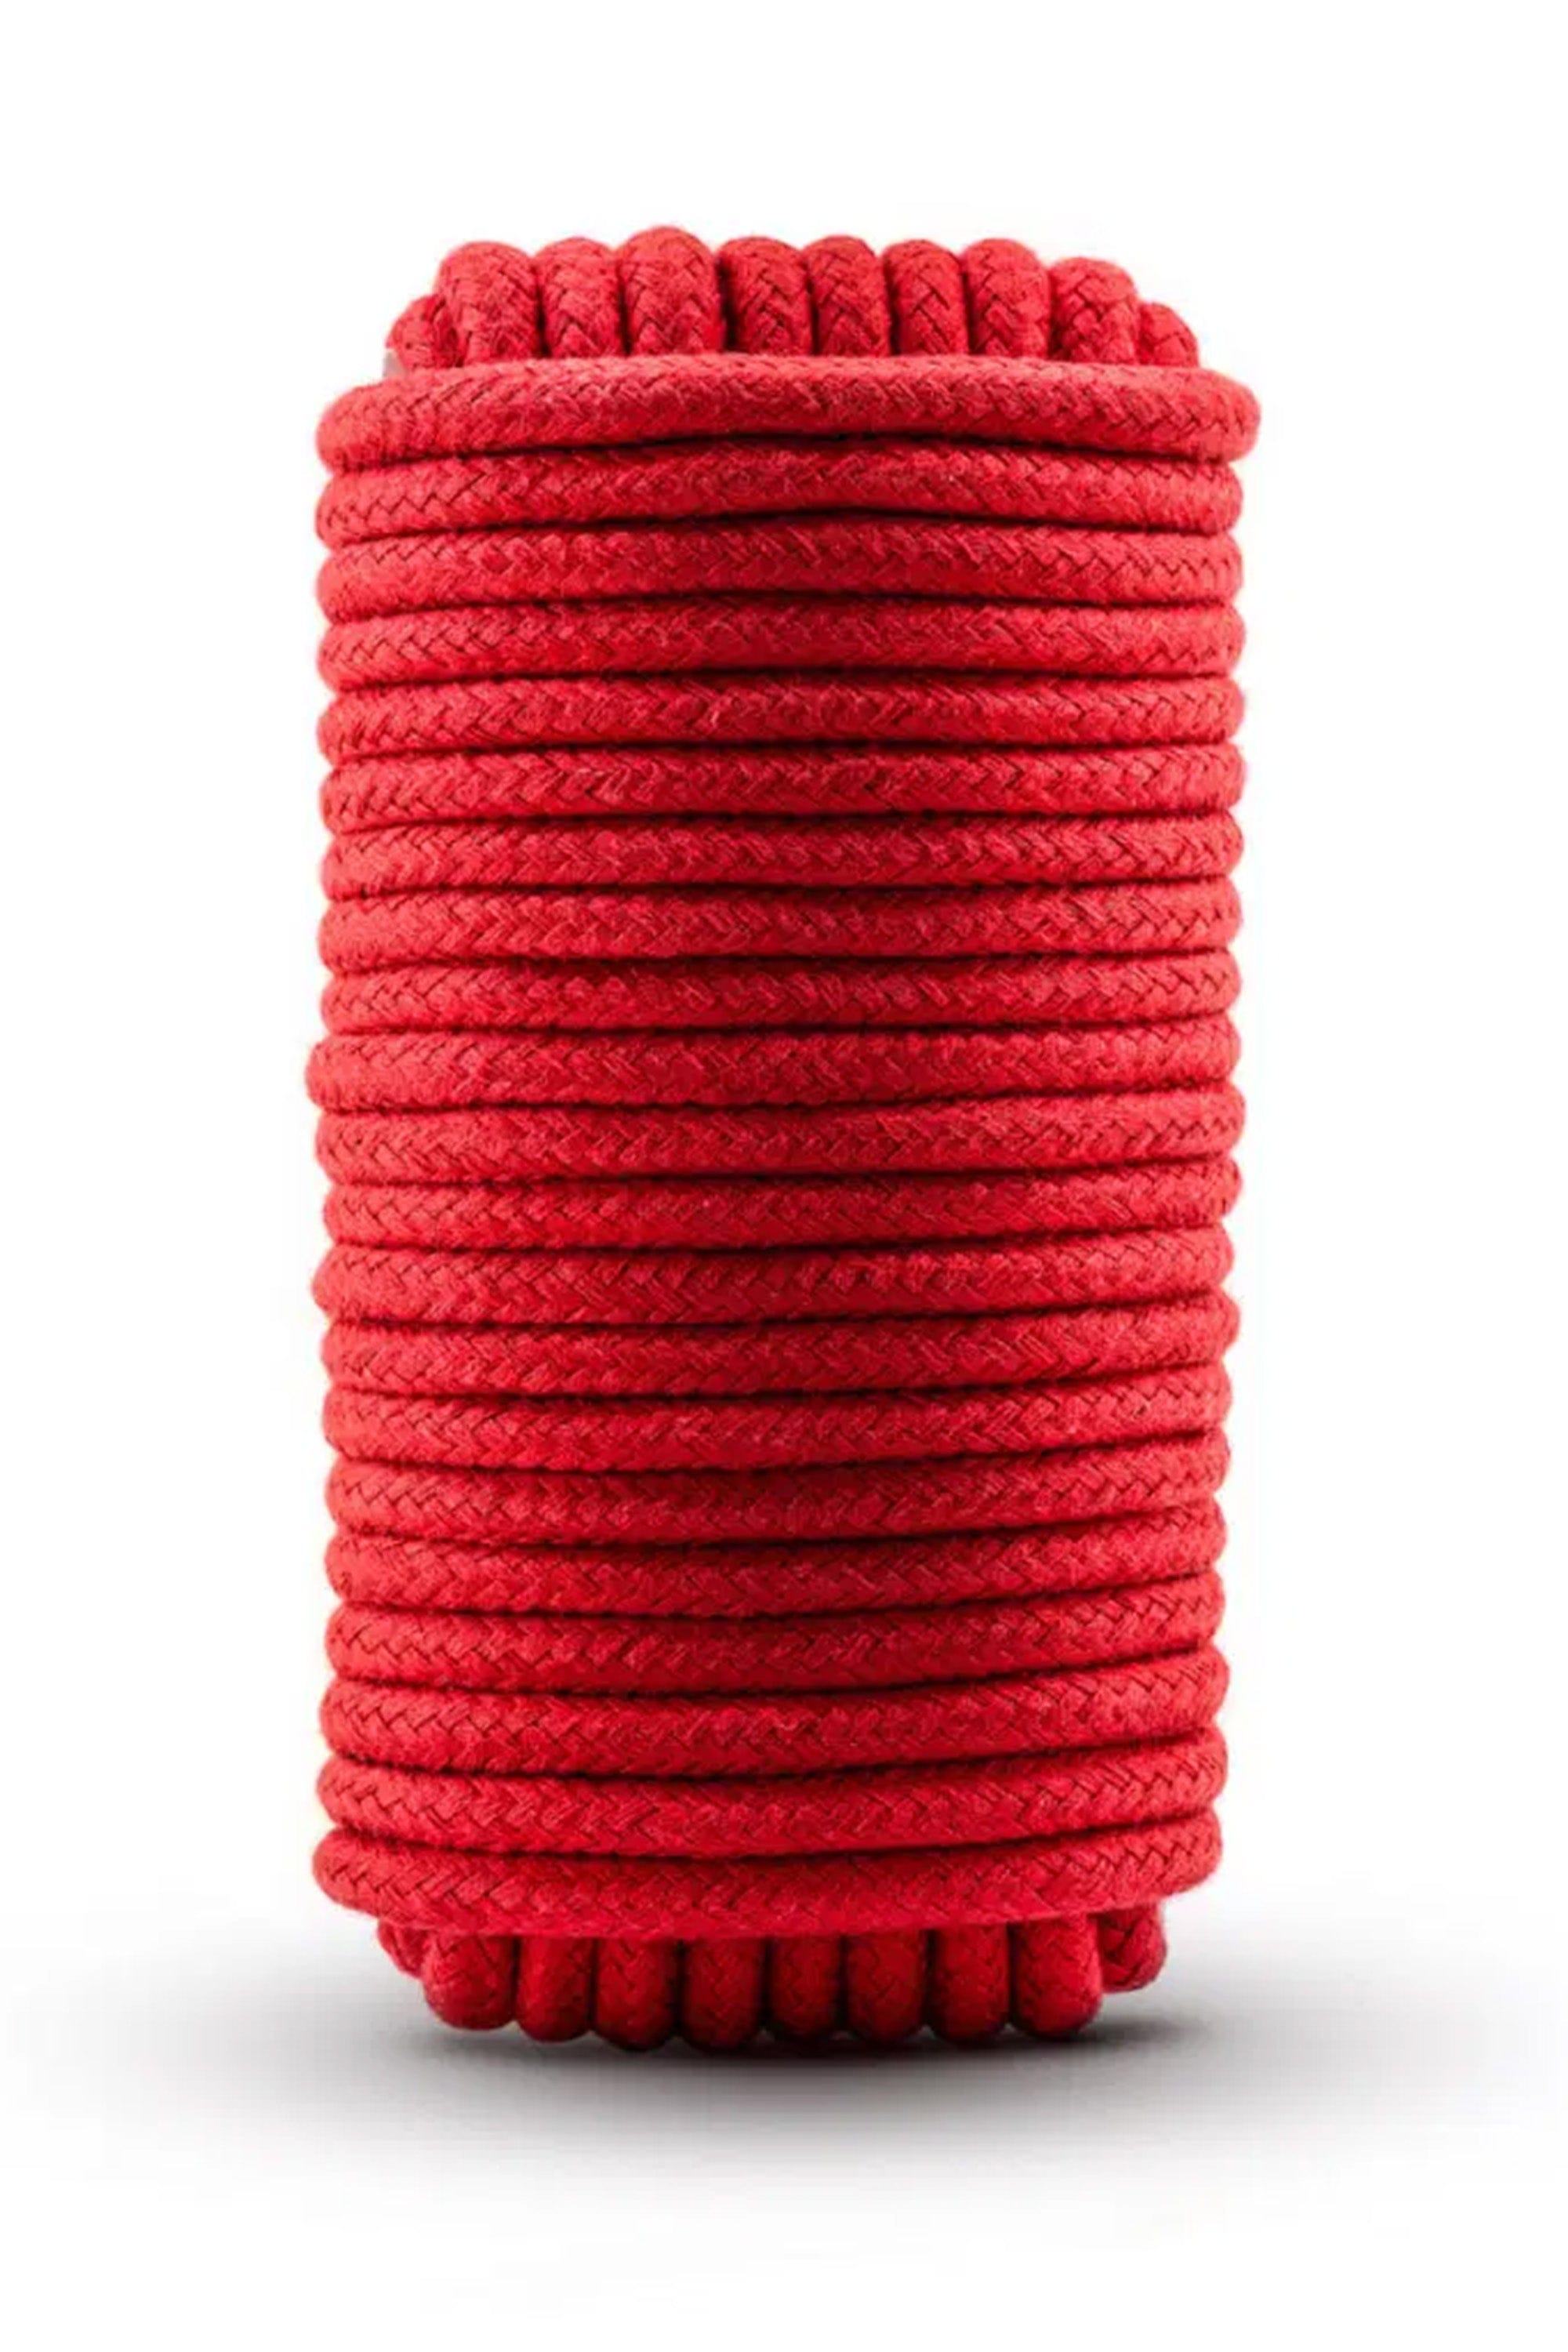 Red Bondage Rope